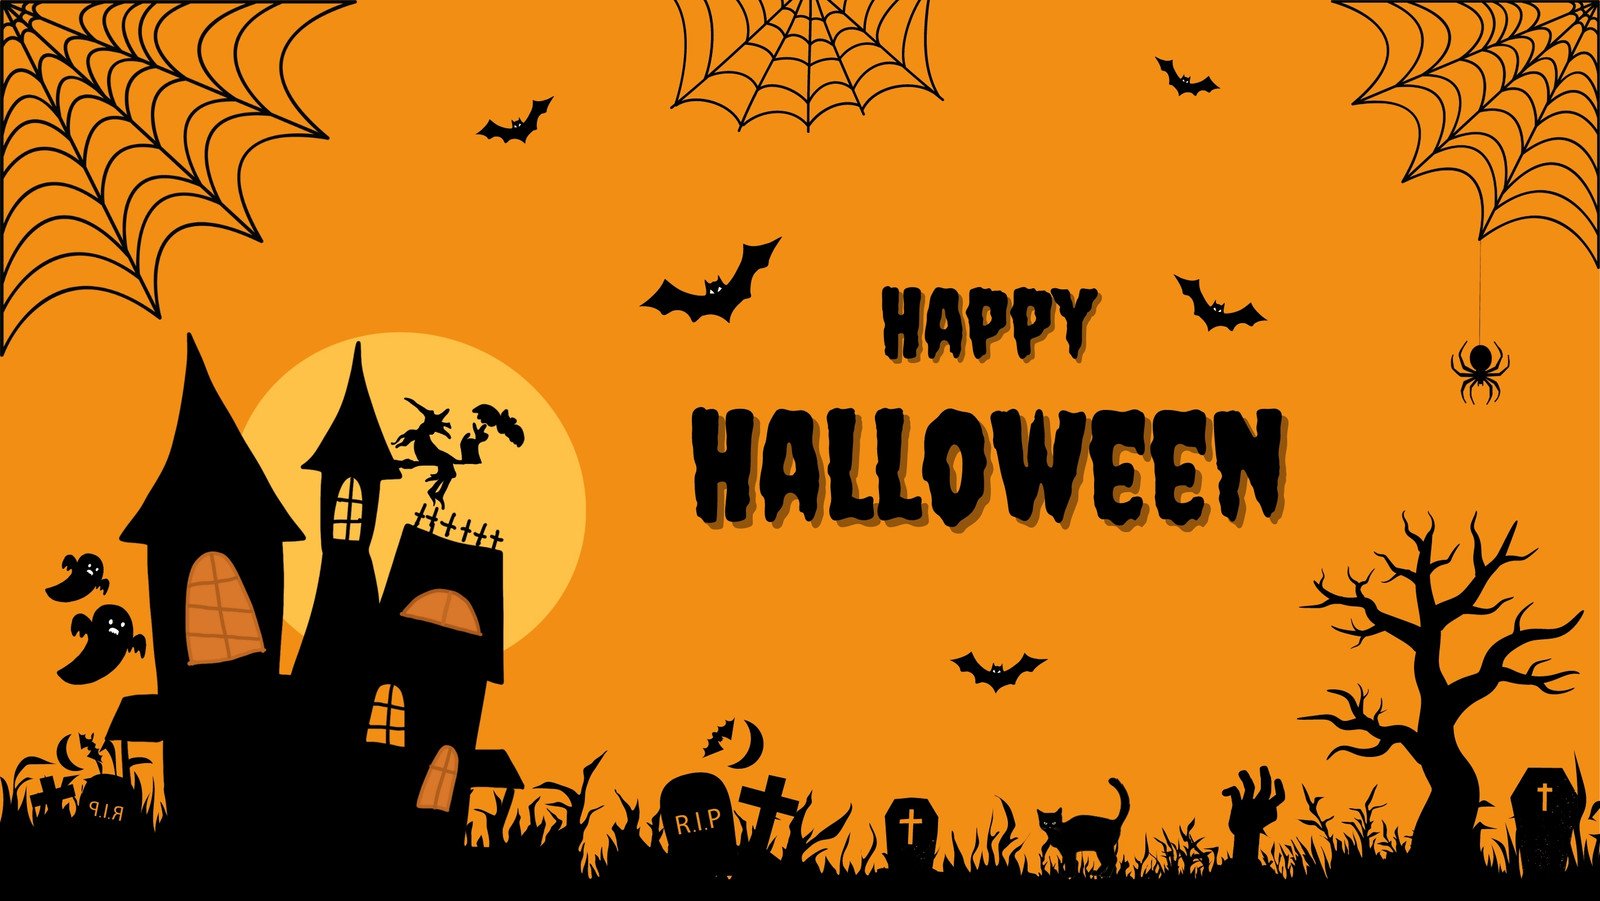 Free custom Halloween Facebook cover templates